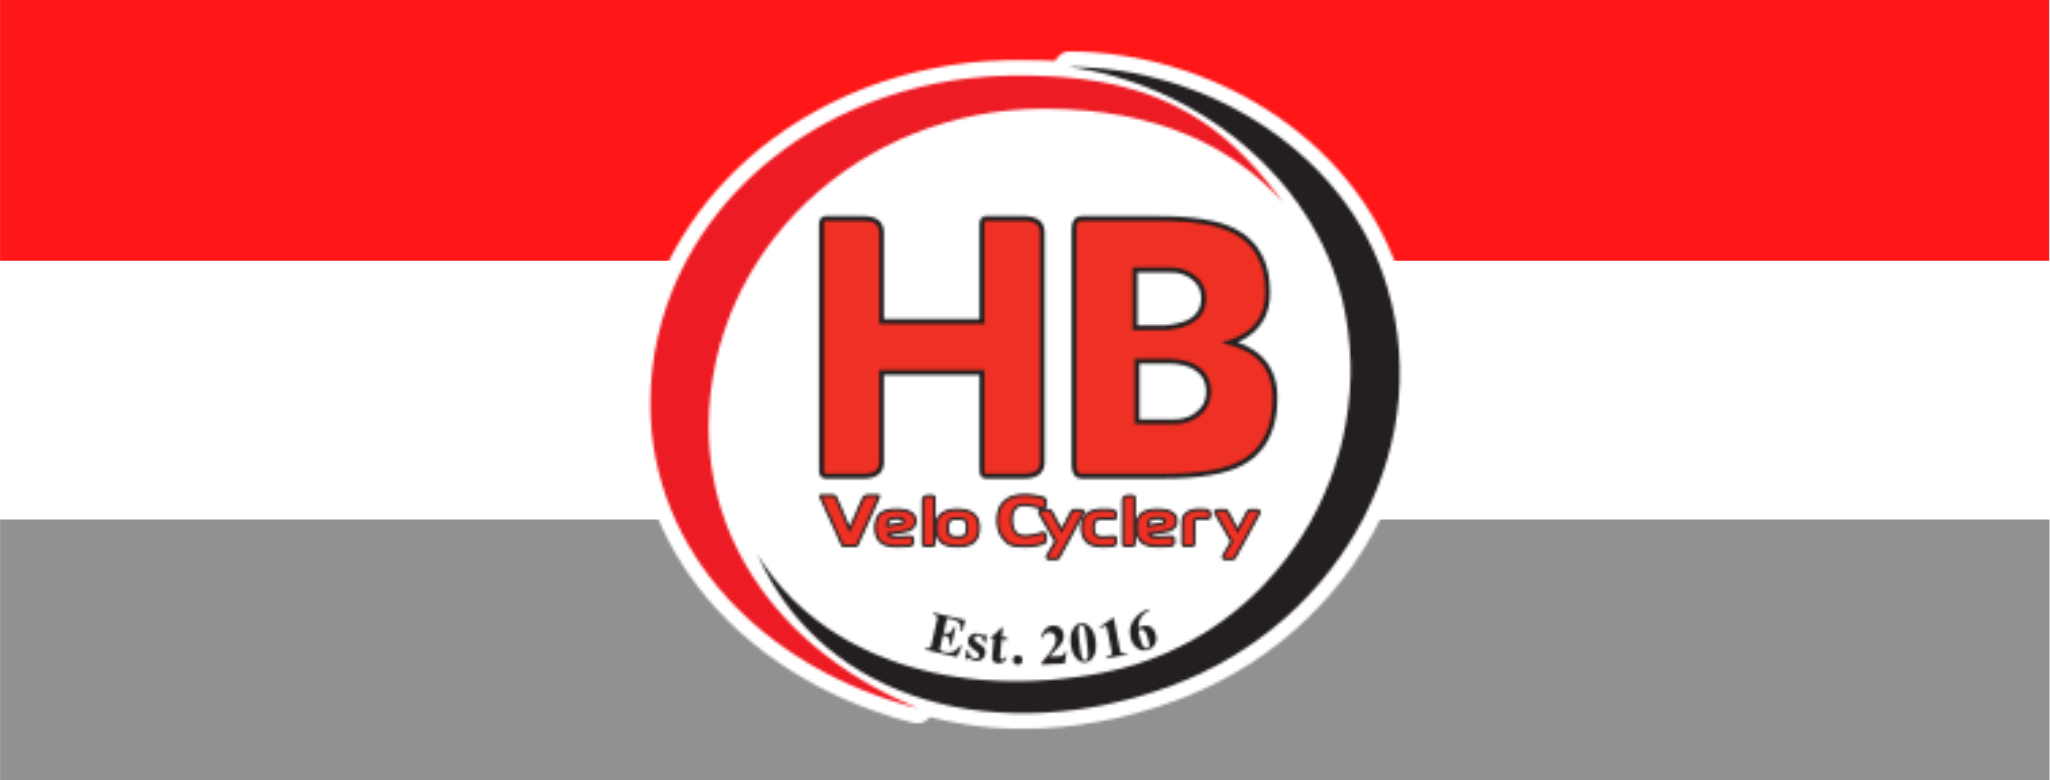 HB Velo Cyclery